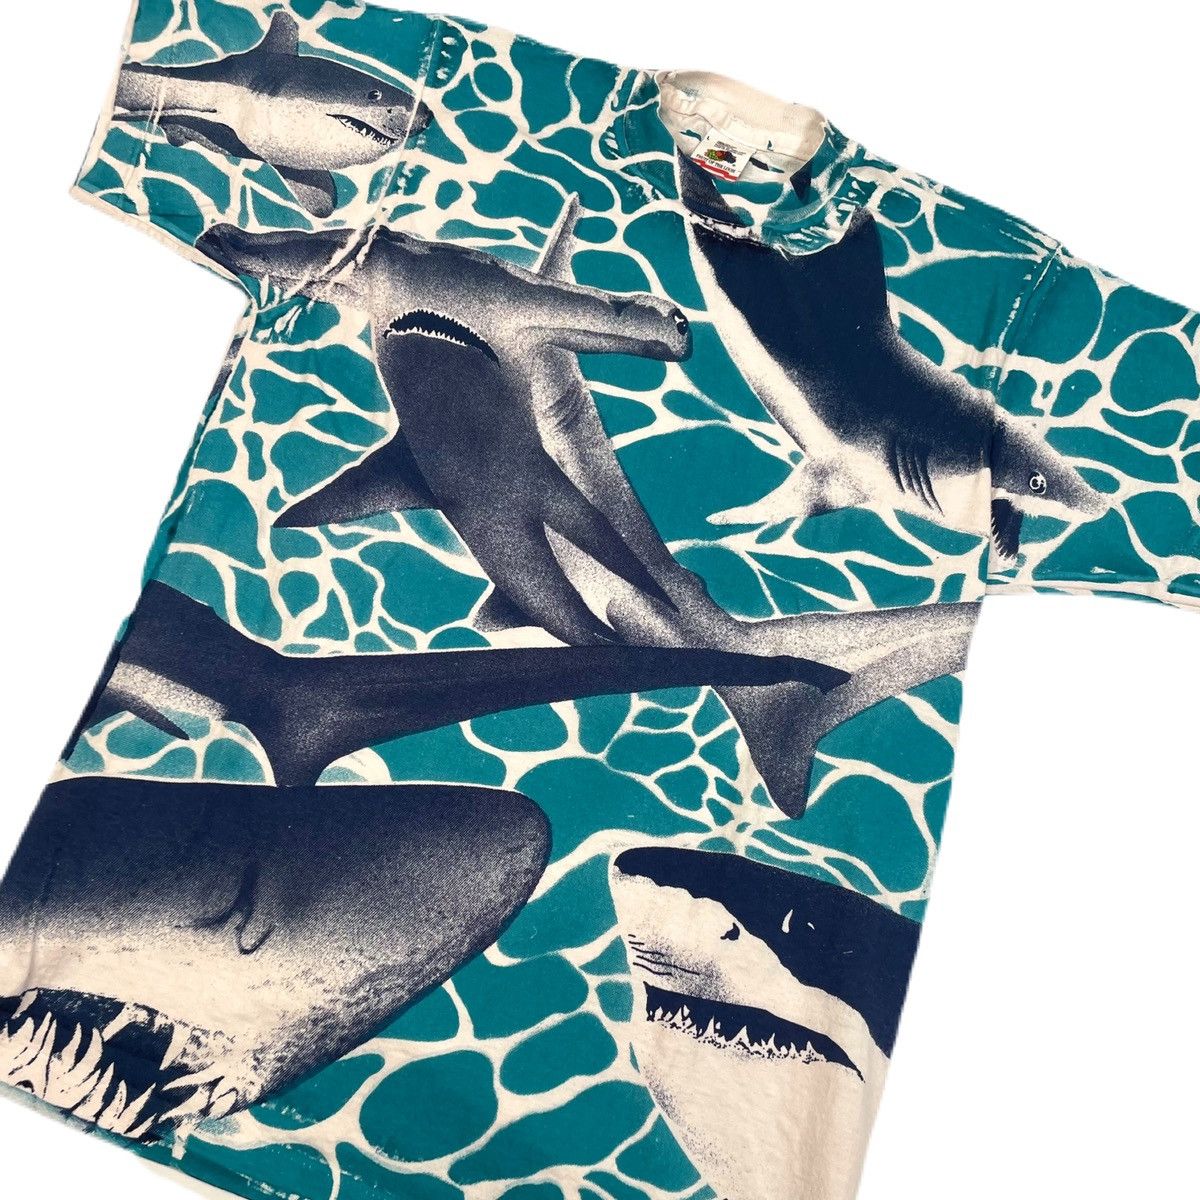 Vintage Shark species all over print single stitch graphic t-shirt Size US S / EU 44-46 / 1 - 3 Thumbnail